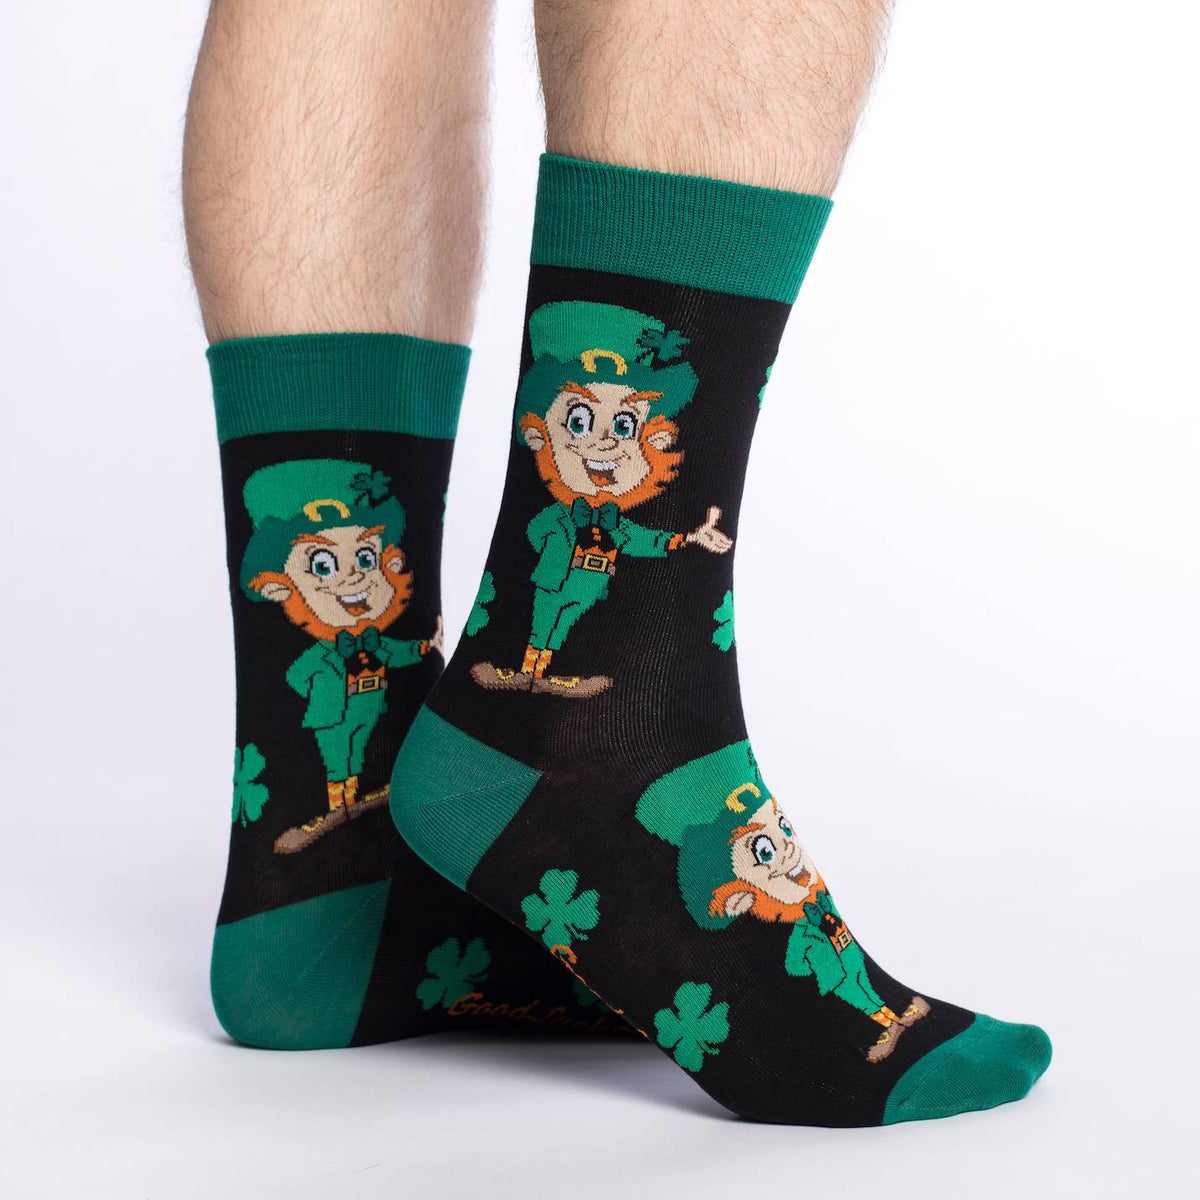 Leprechaun Socks - Mens - 1 Pair